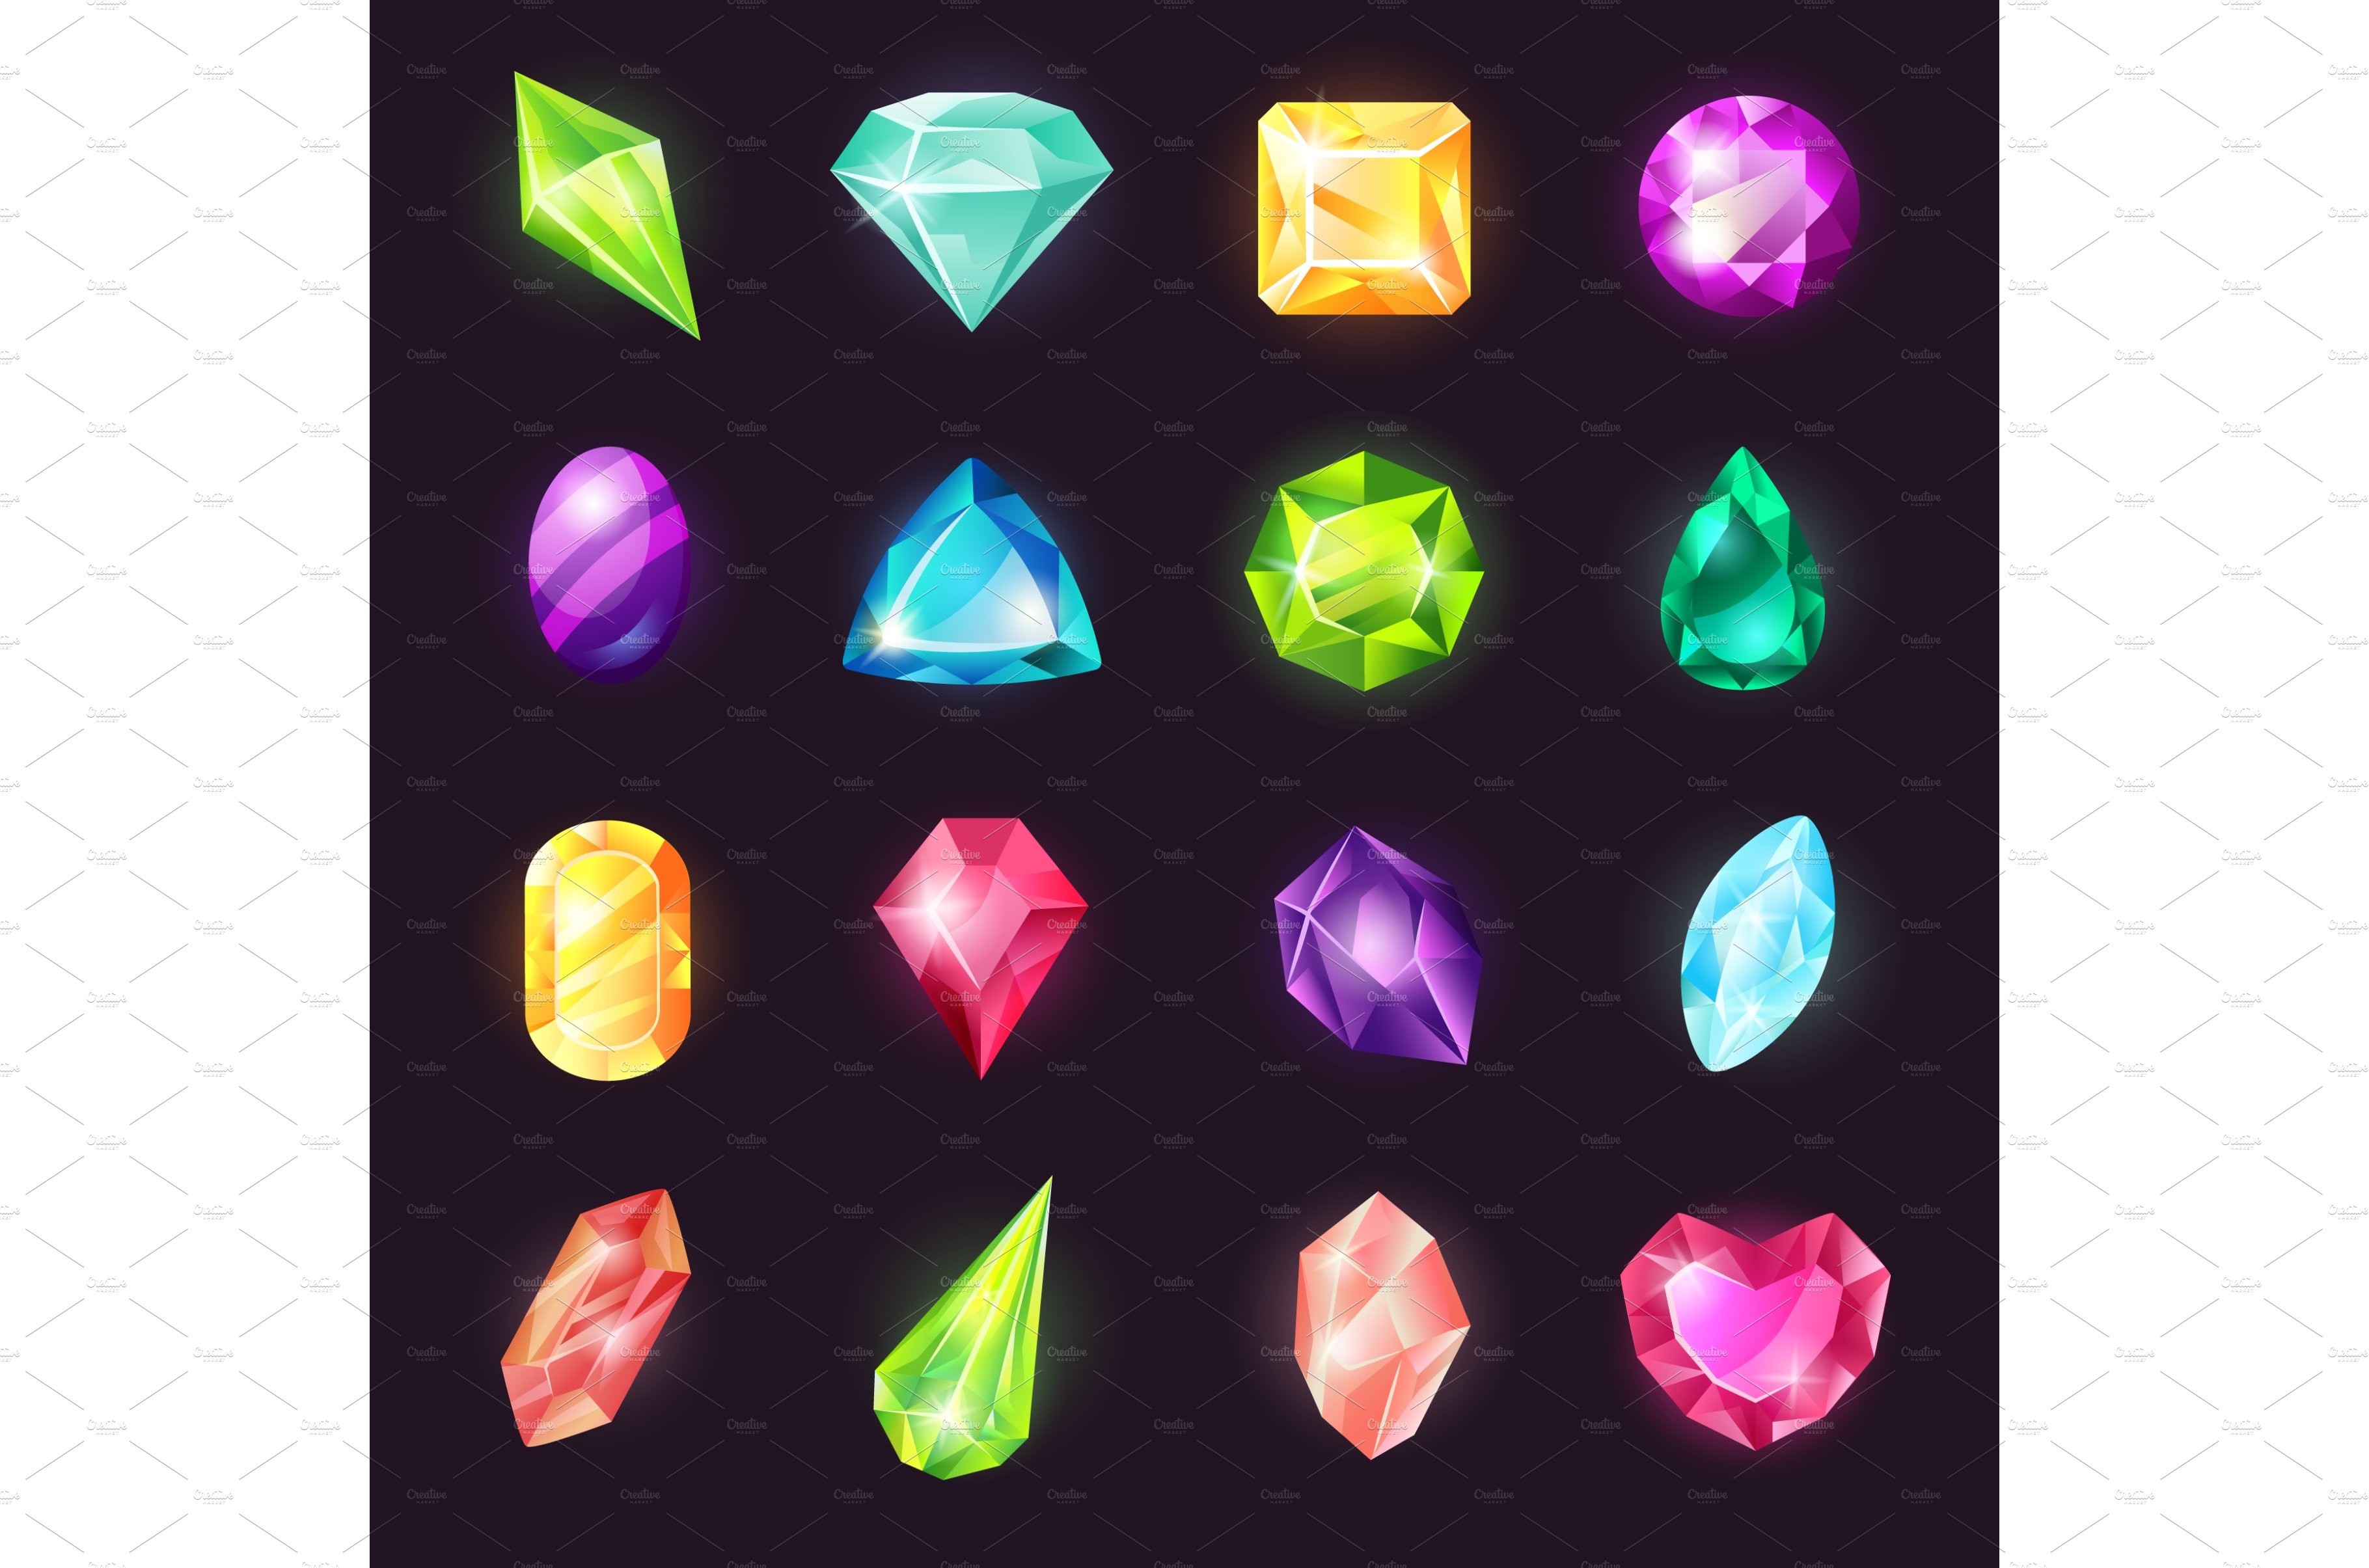 Cartoon gemstones, magic crystals cover image.